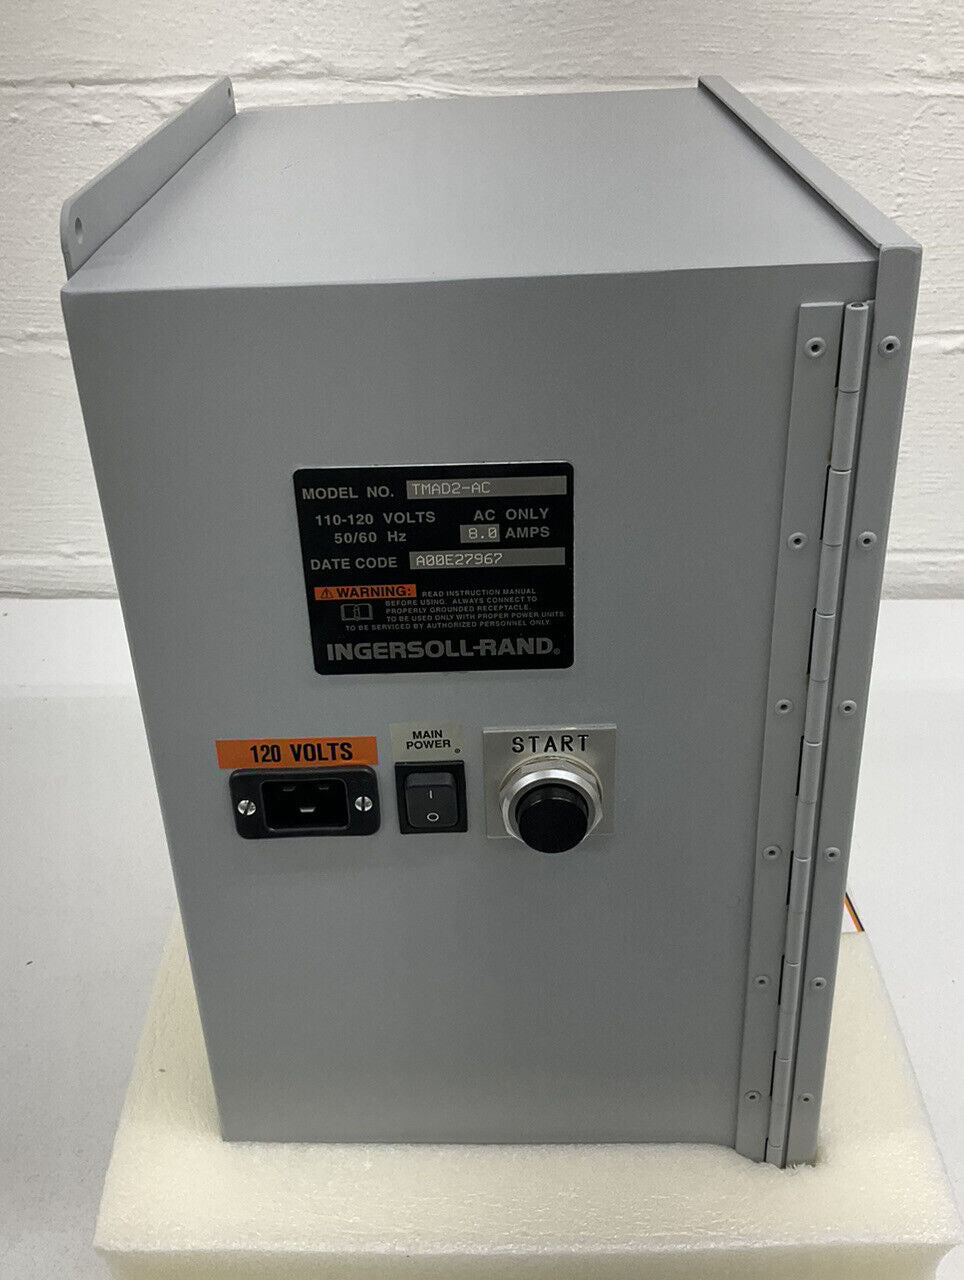 Ingersoll Rand TMAD2-AC TMAD2AC  New Torque Controller (OV104)